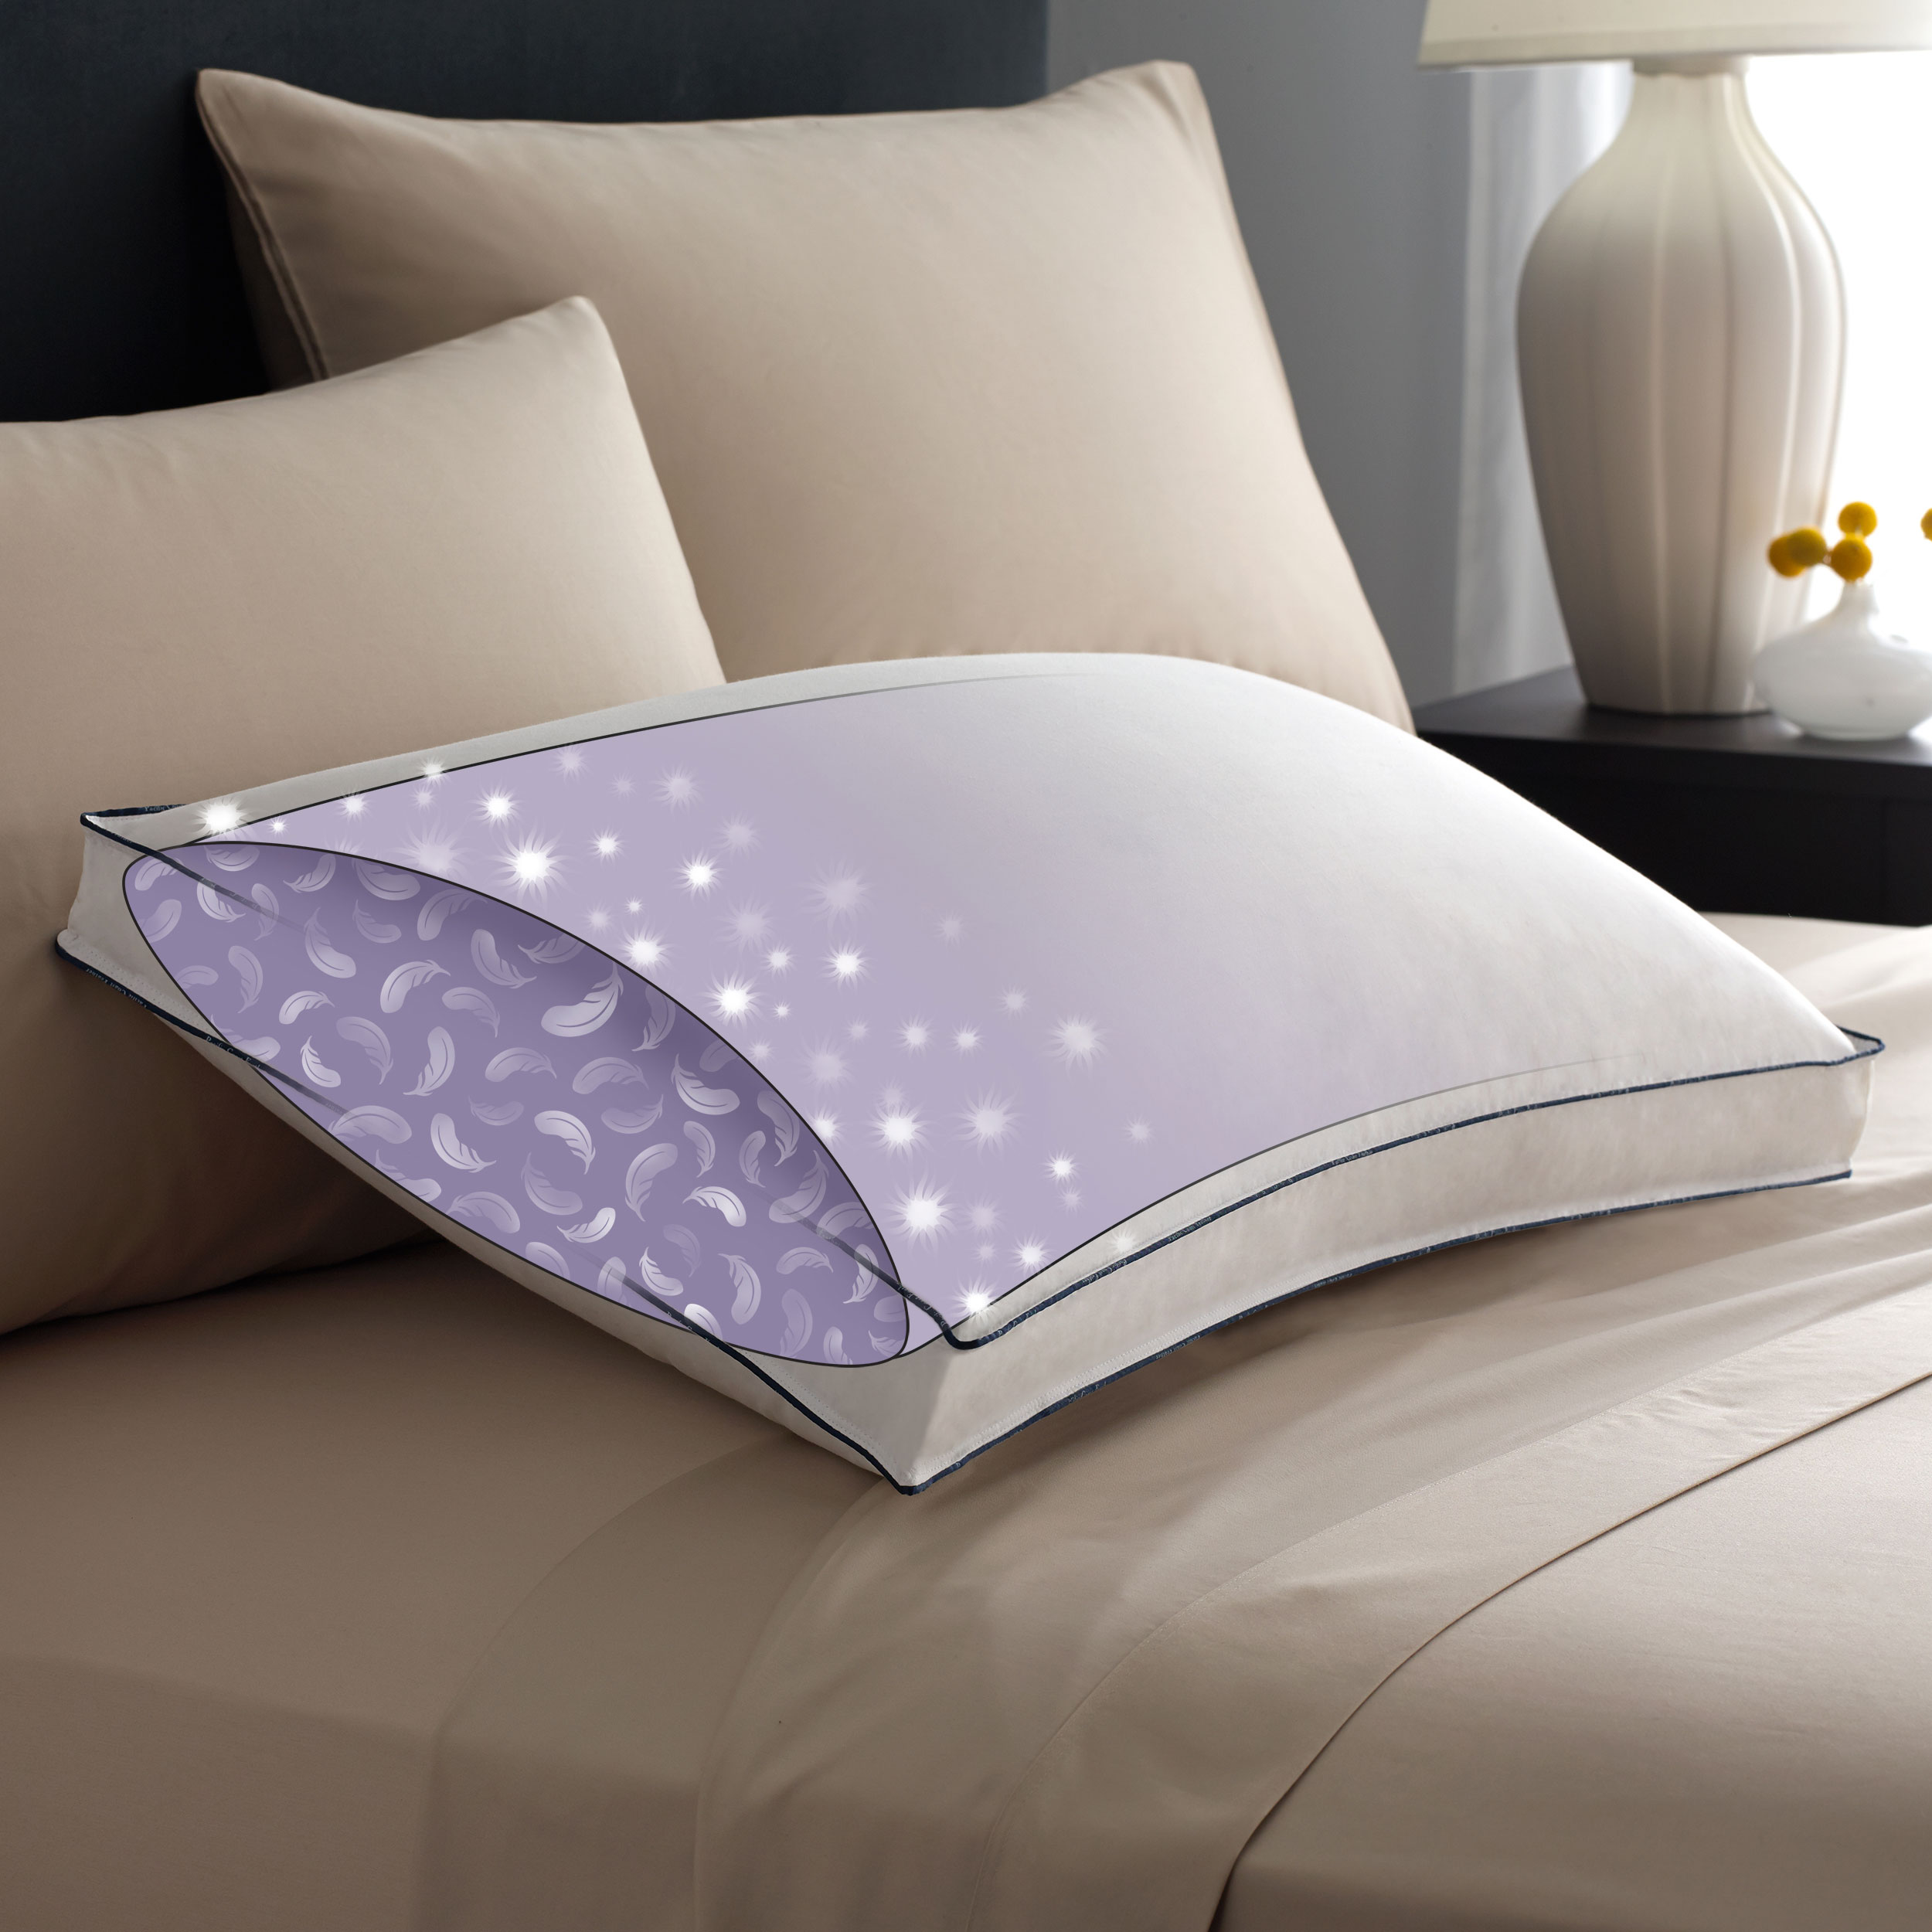 Pillow Sizes Chart Australia